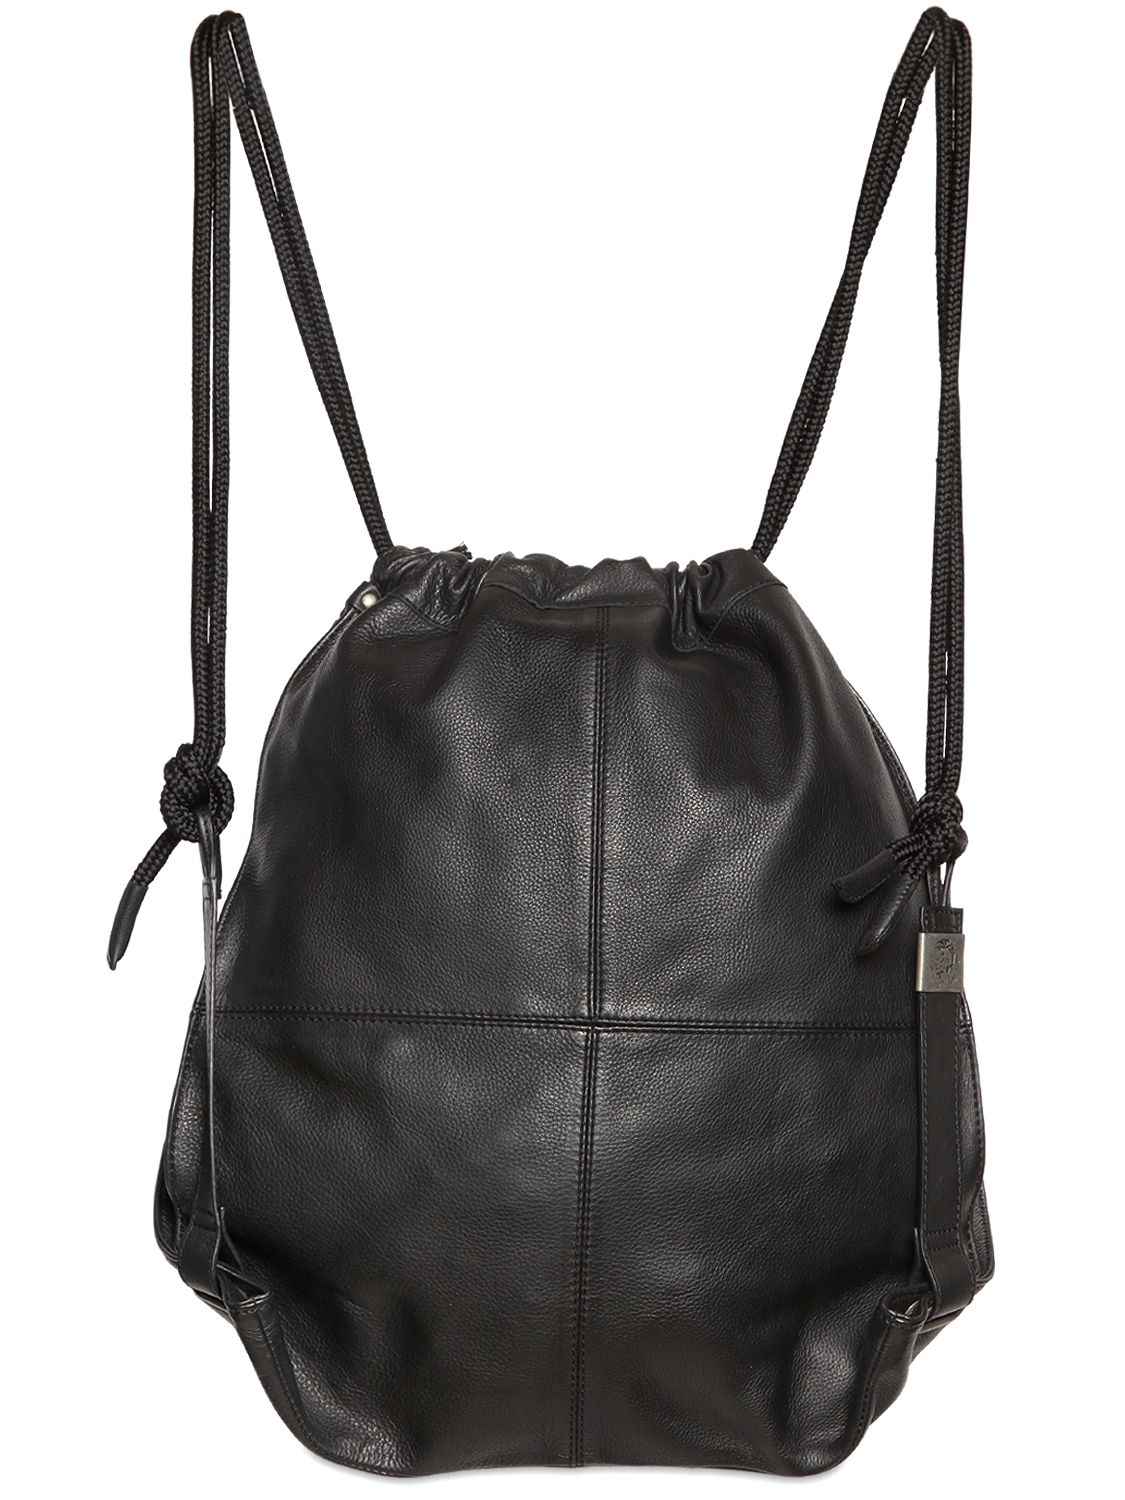 Lyst - Diesel Leather Drawstring Backpack in Black for Men